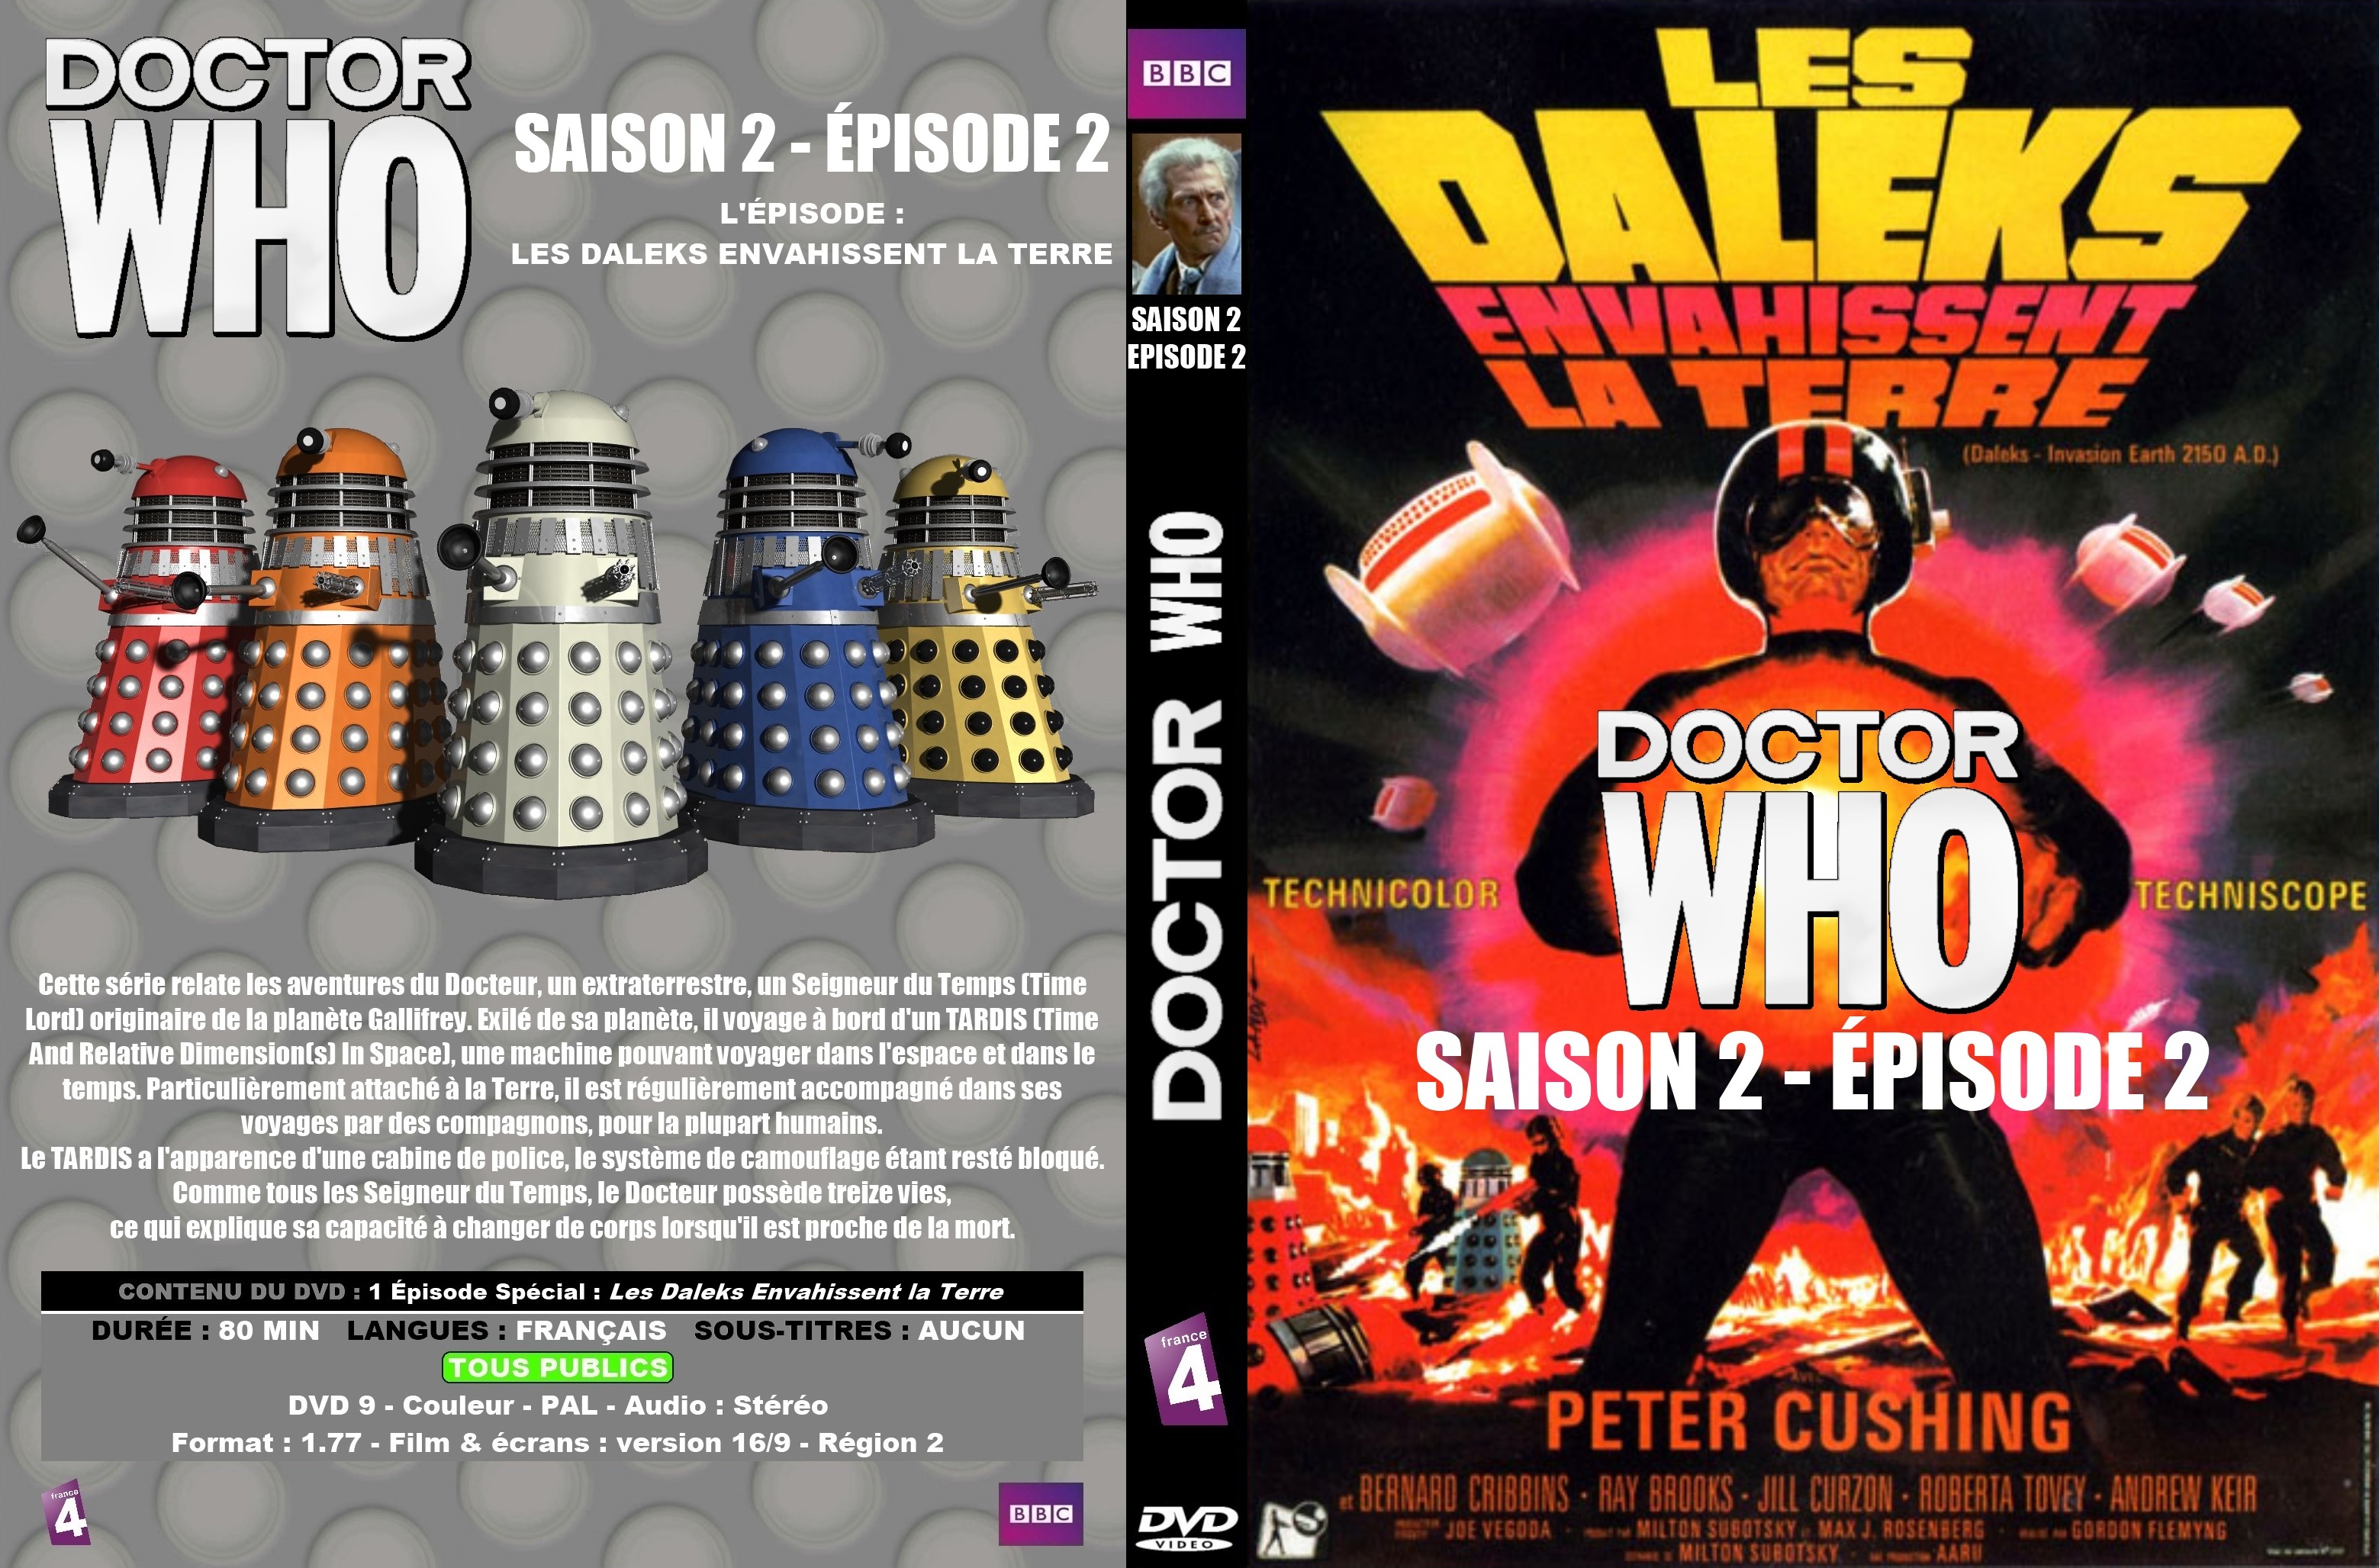 Jaquette DVD Doctor Who Classic Saison 2 pisode 2 custom